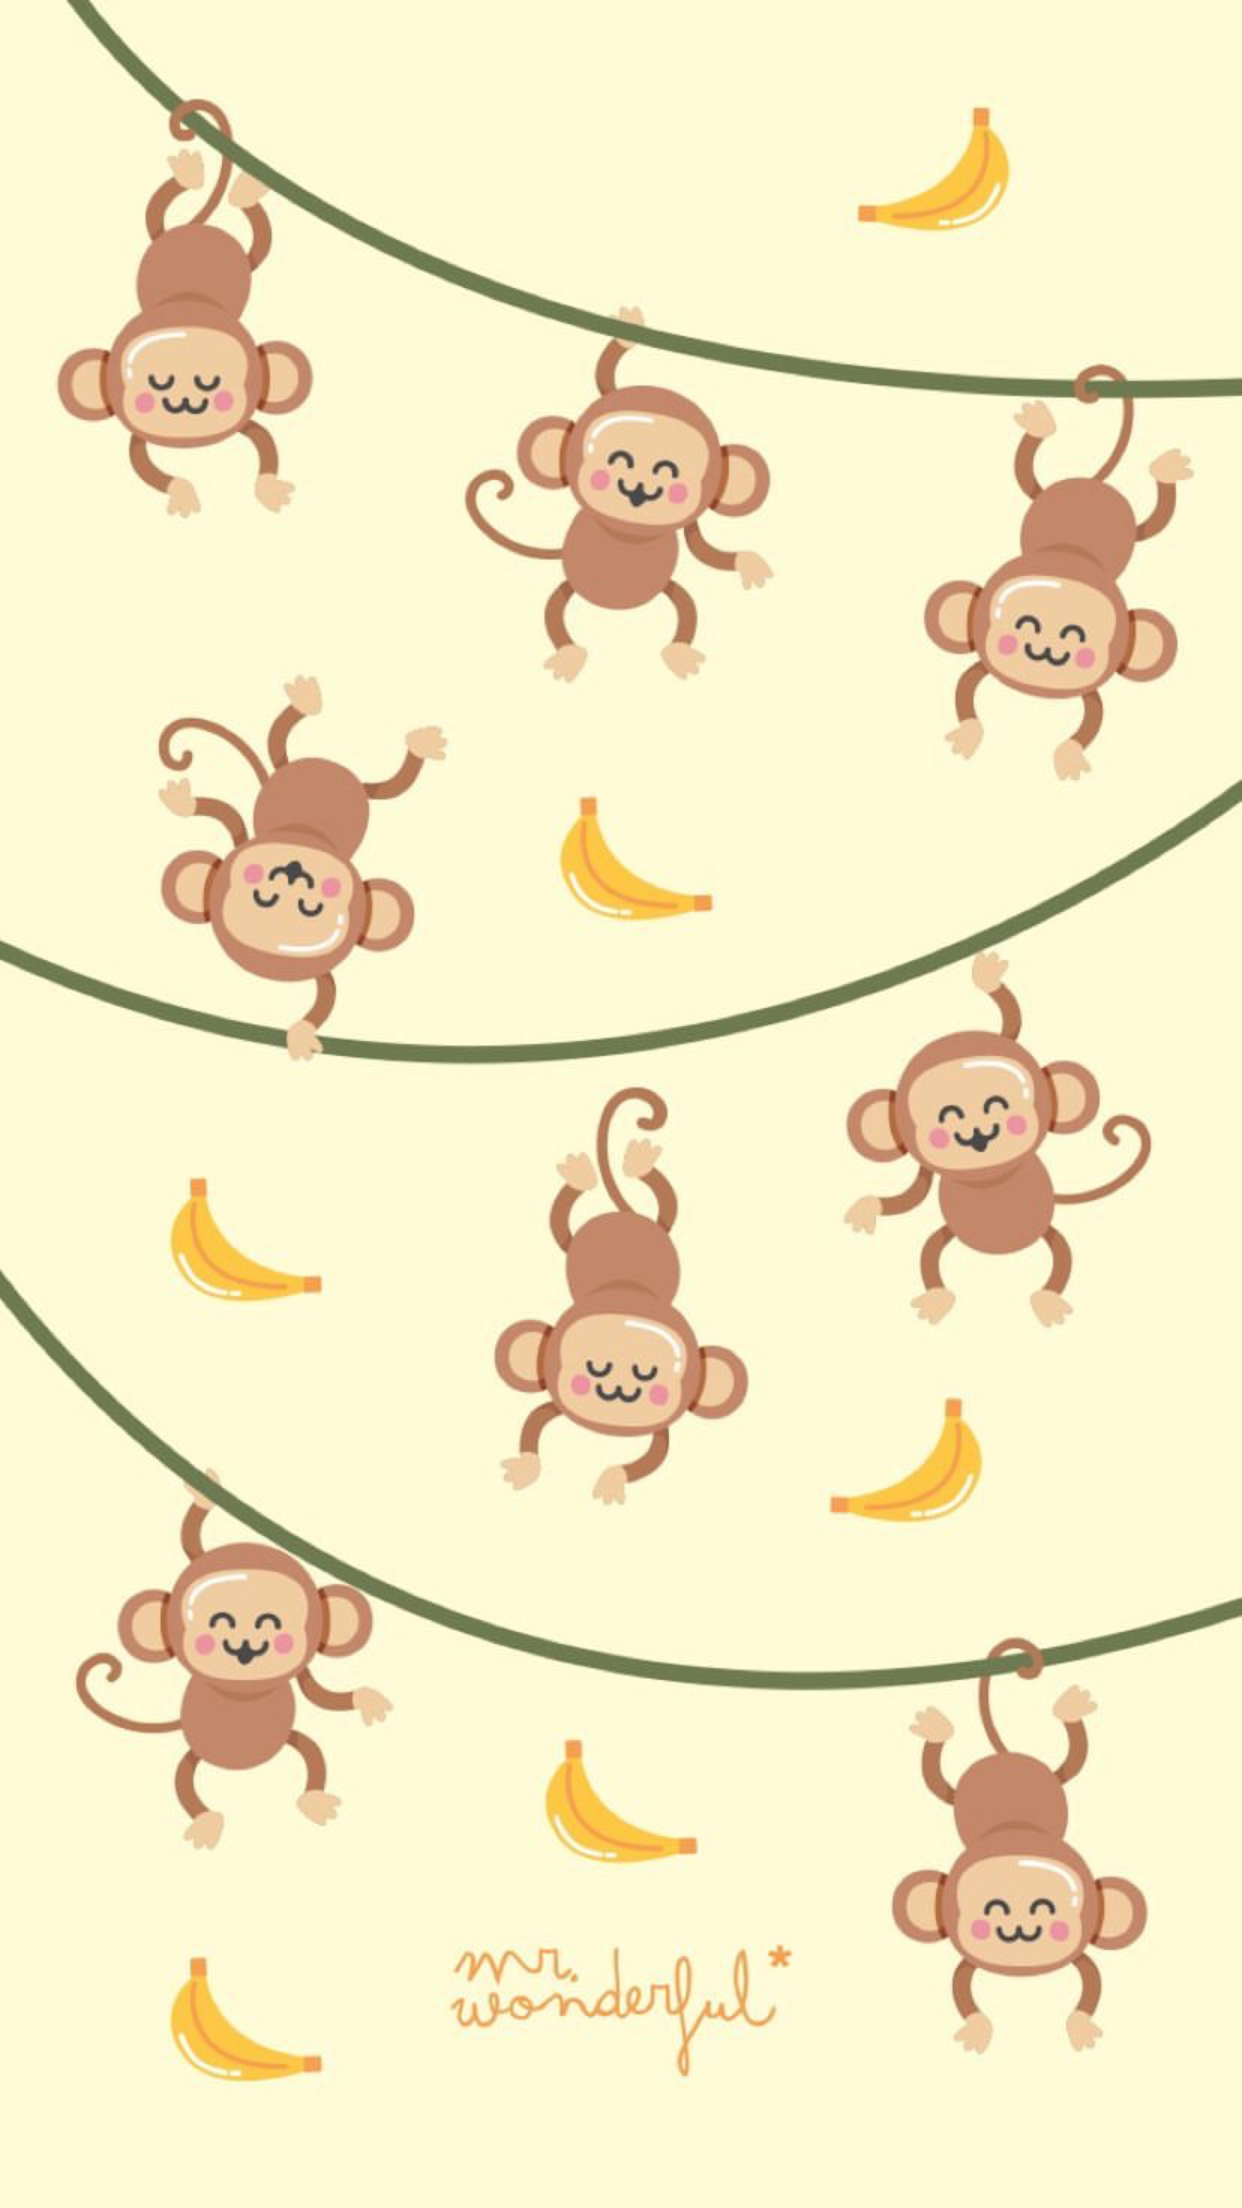 p i n t e r e s t, P e l i n Ç a l ı ş k a n❤. Monkey wallpaper, Wallpaper iphone cute, Kawaii wallpaper